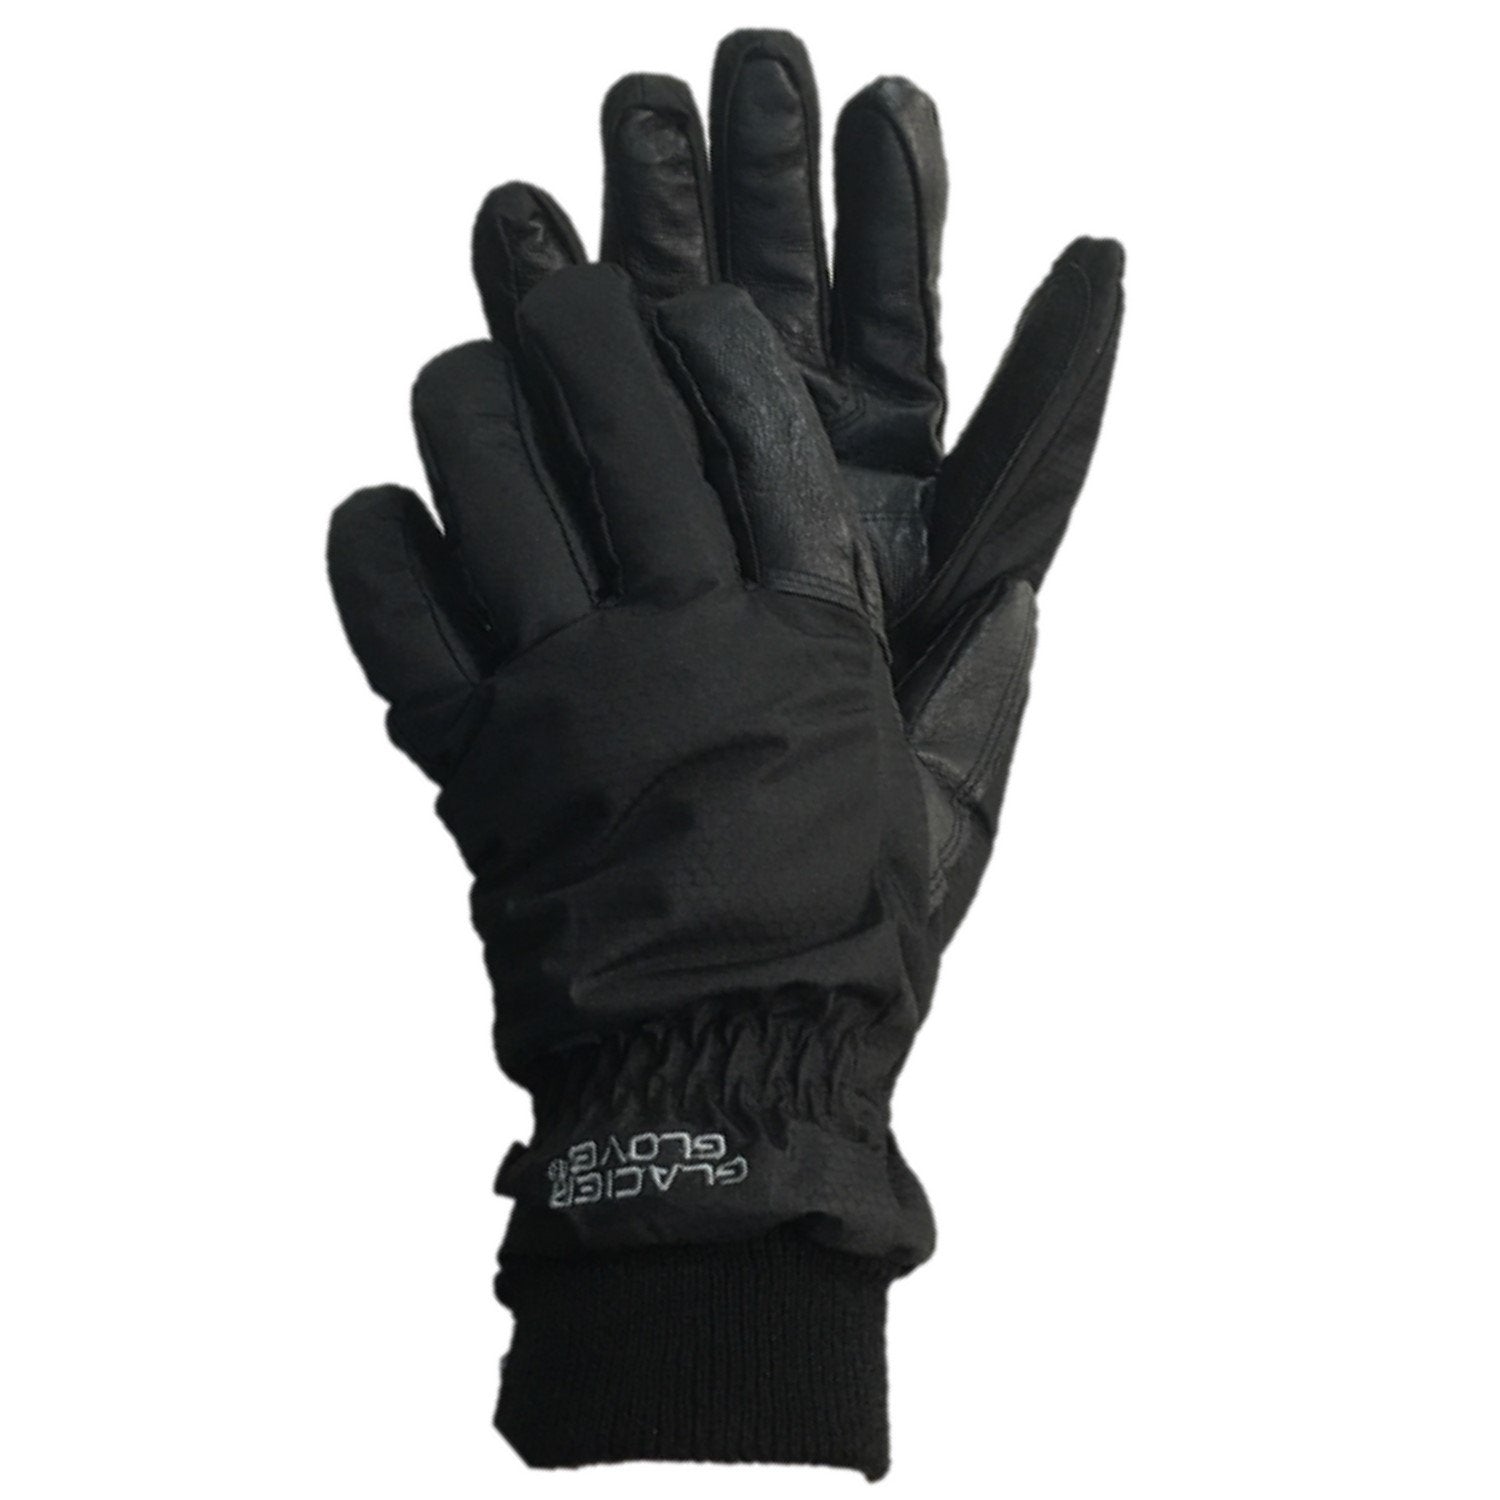 Glacier Alaska Pro Insulated Gloves, 60gms